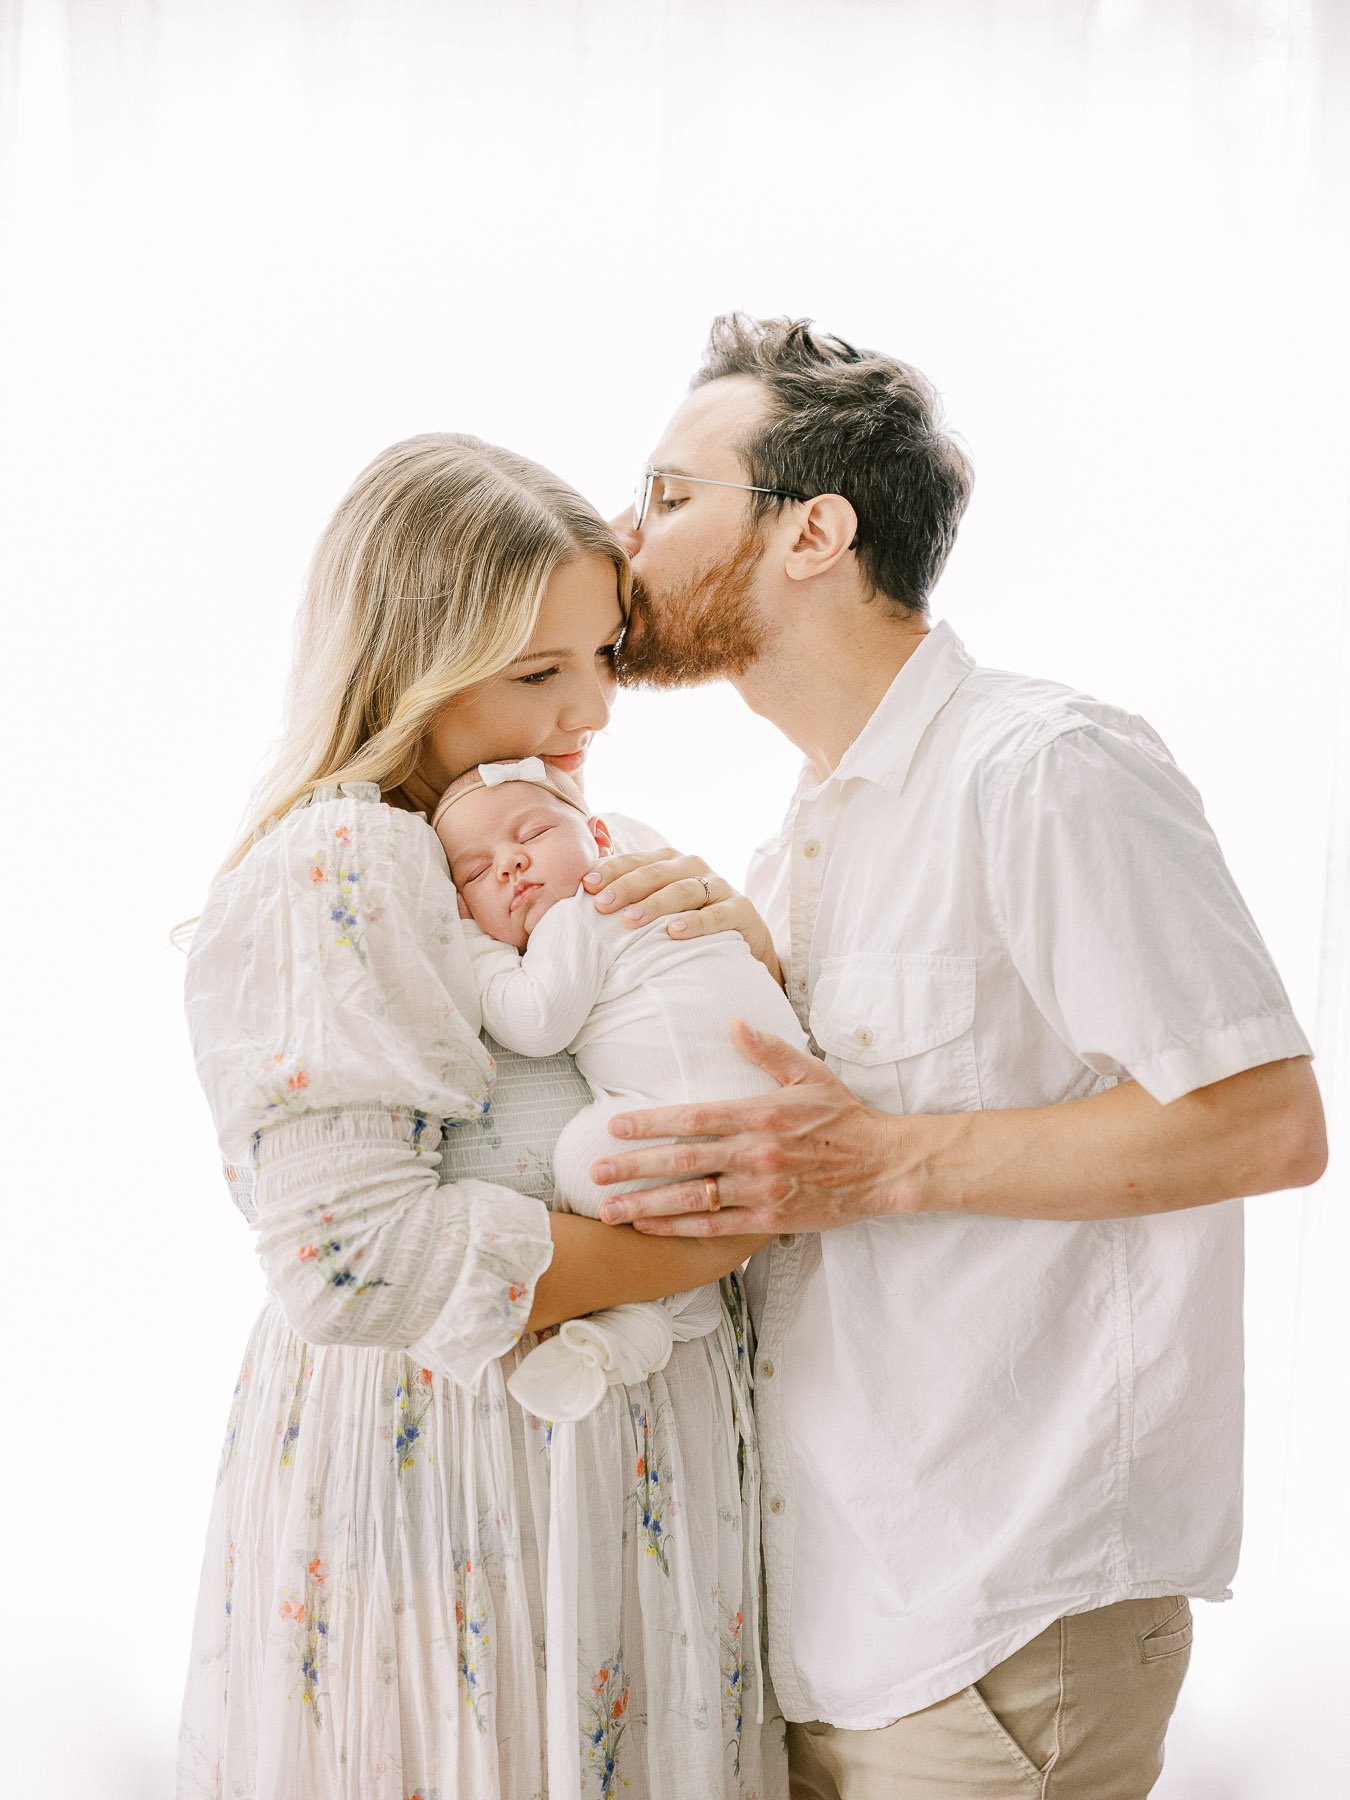 Upstate NY family and newborn photographer